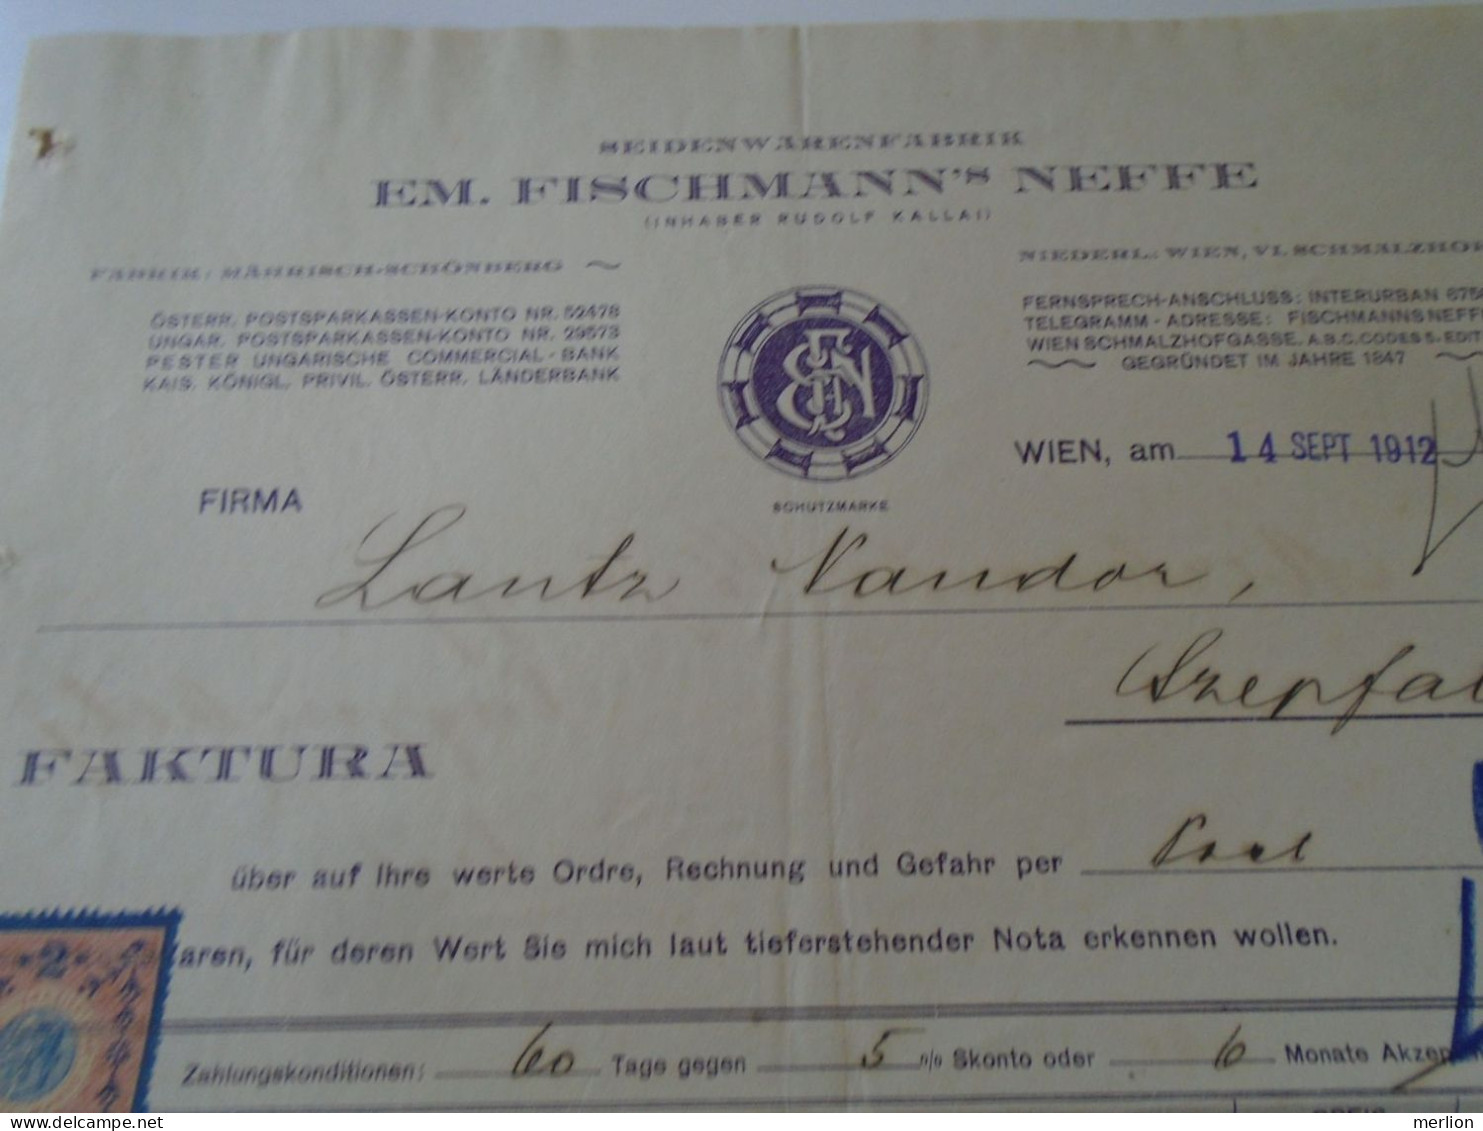 ZA470.28 Old Invoice  Austria -Em. Fischmann's Neffe  WIEN 1912 Sent To Nandor LANTZ Temesszépfalu Banat Hungary Romania - Oostenrijk